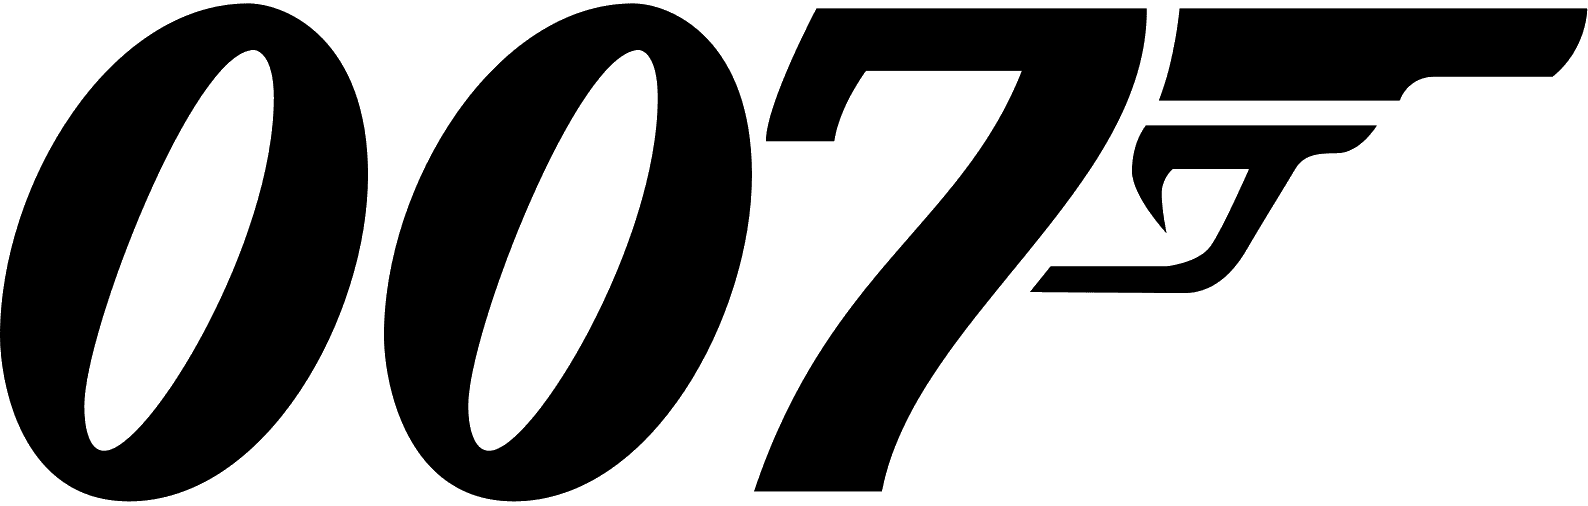 Bond - 007 Series